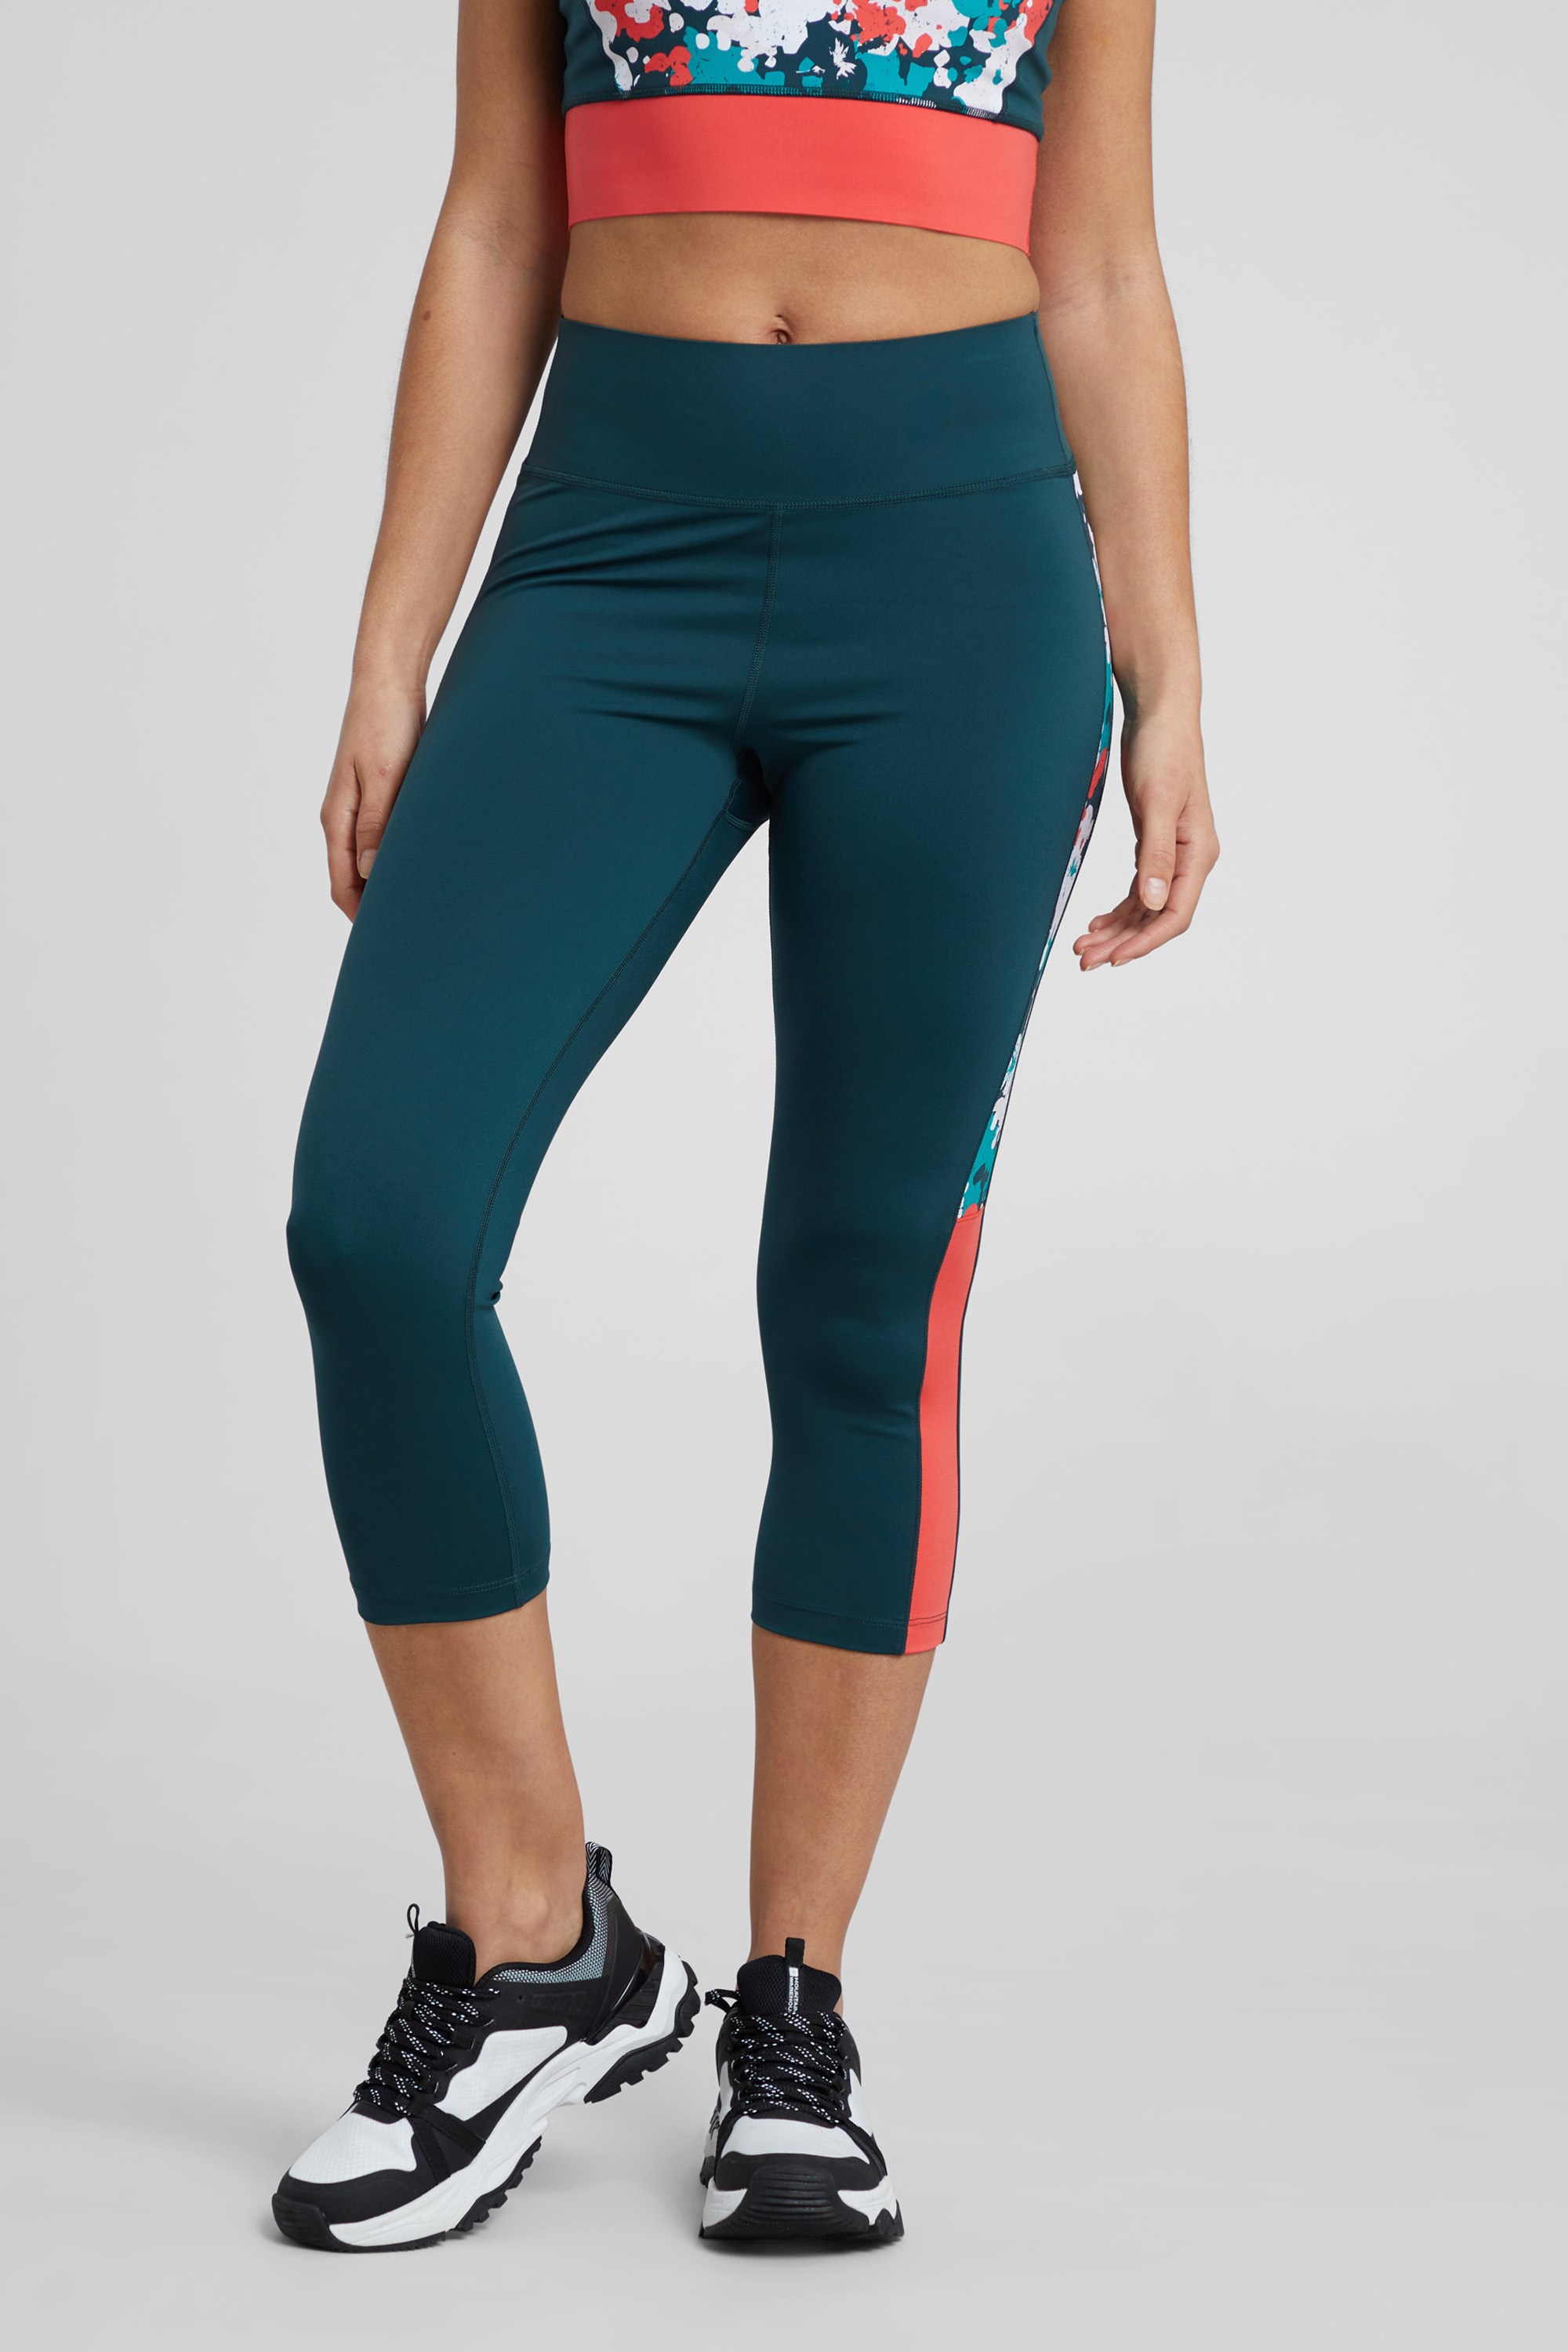 Buy Workout Leggings For Women Capri Yoga Pants With Side Pocket Gym Tights  - White White S Online | Kogan.com